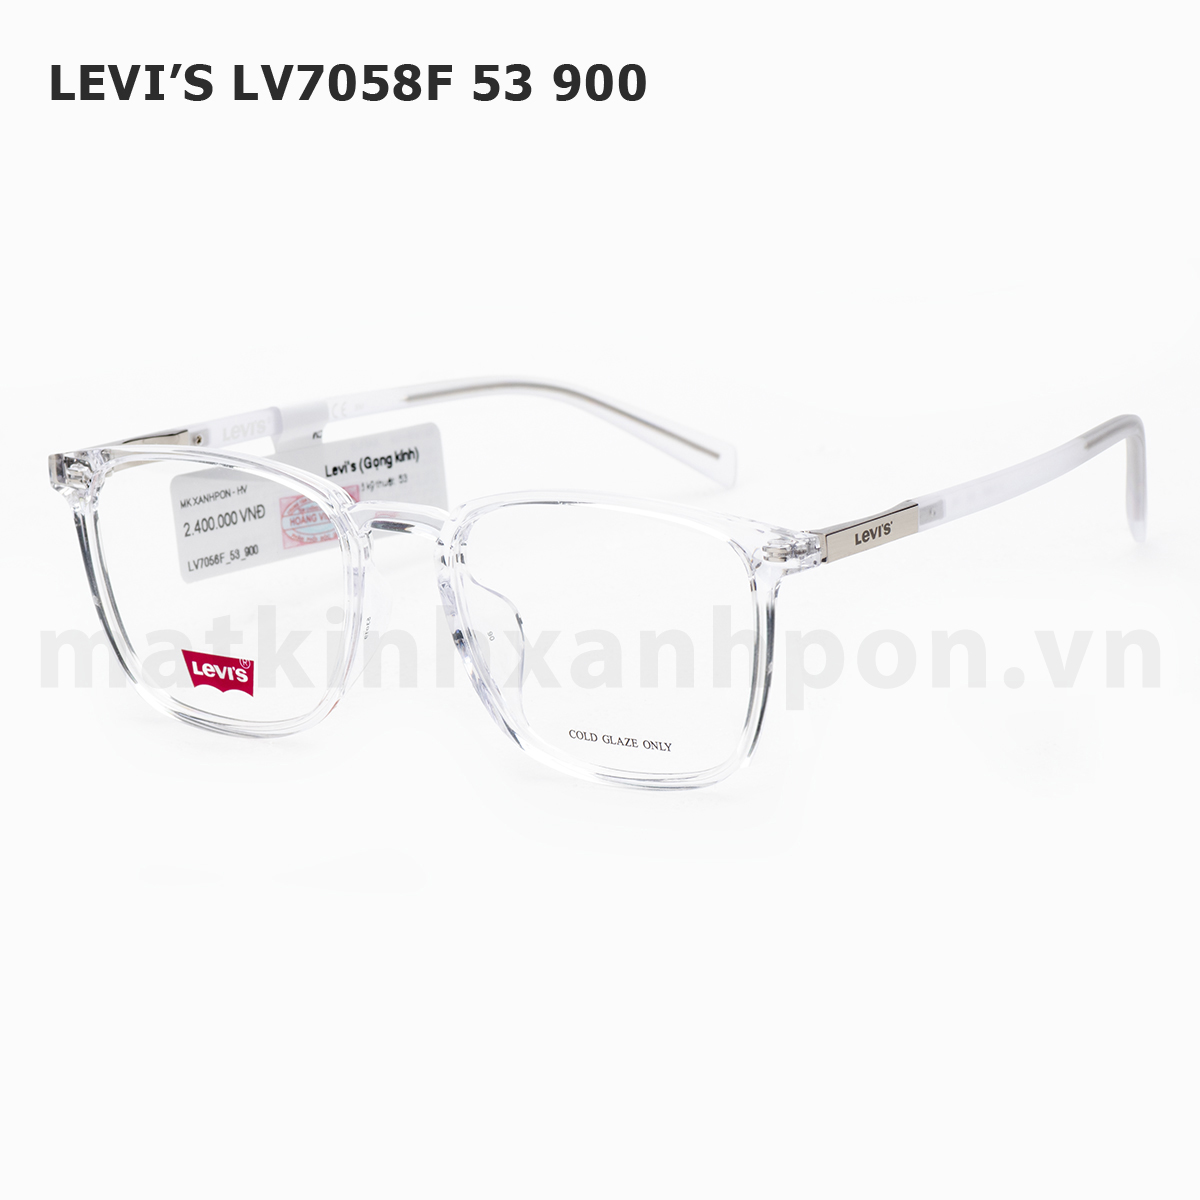 Levi’s LV7058F 53 900